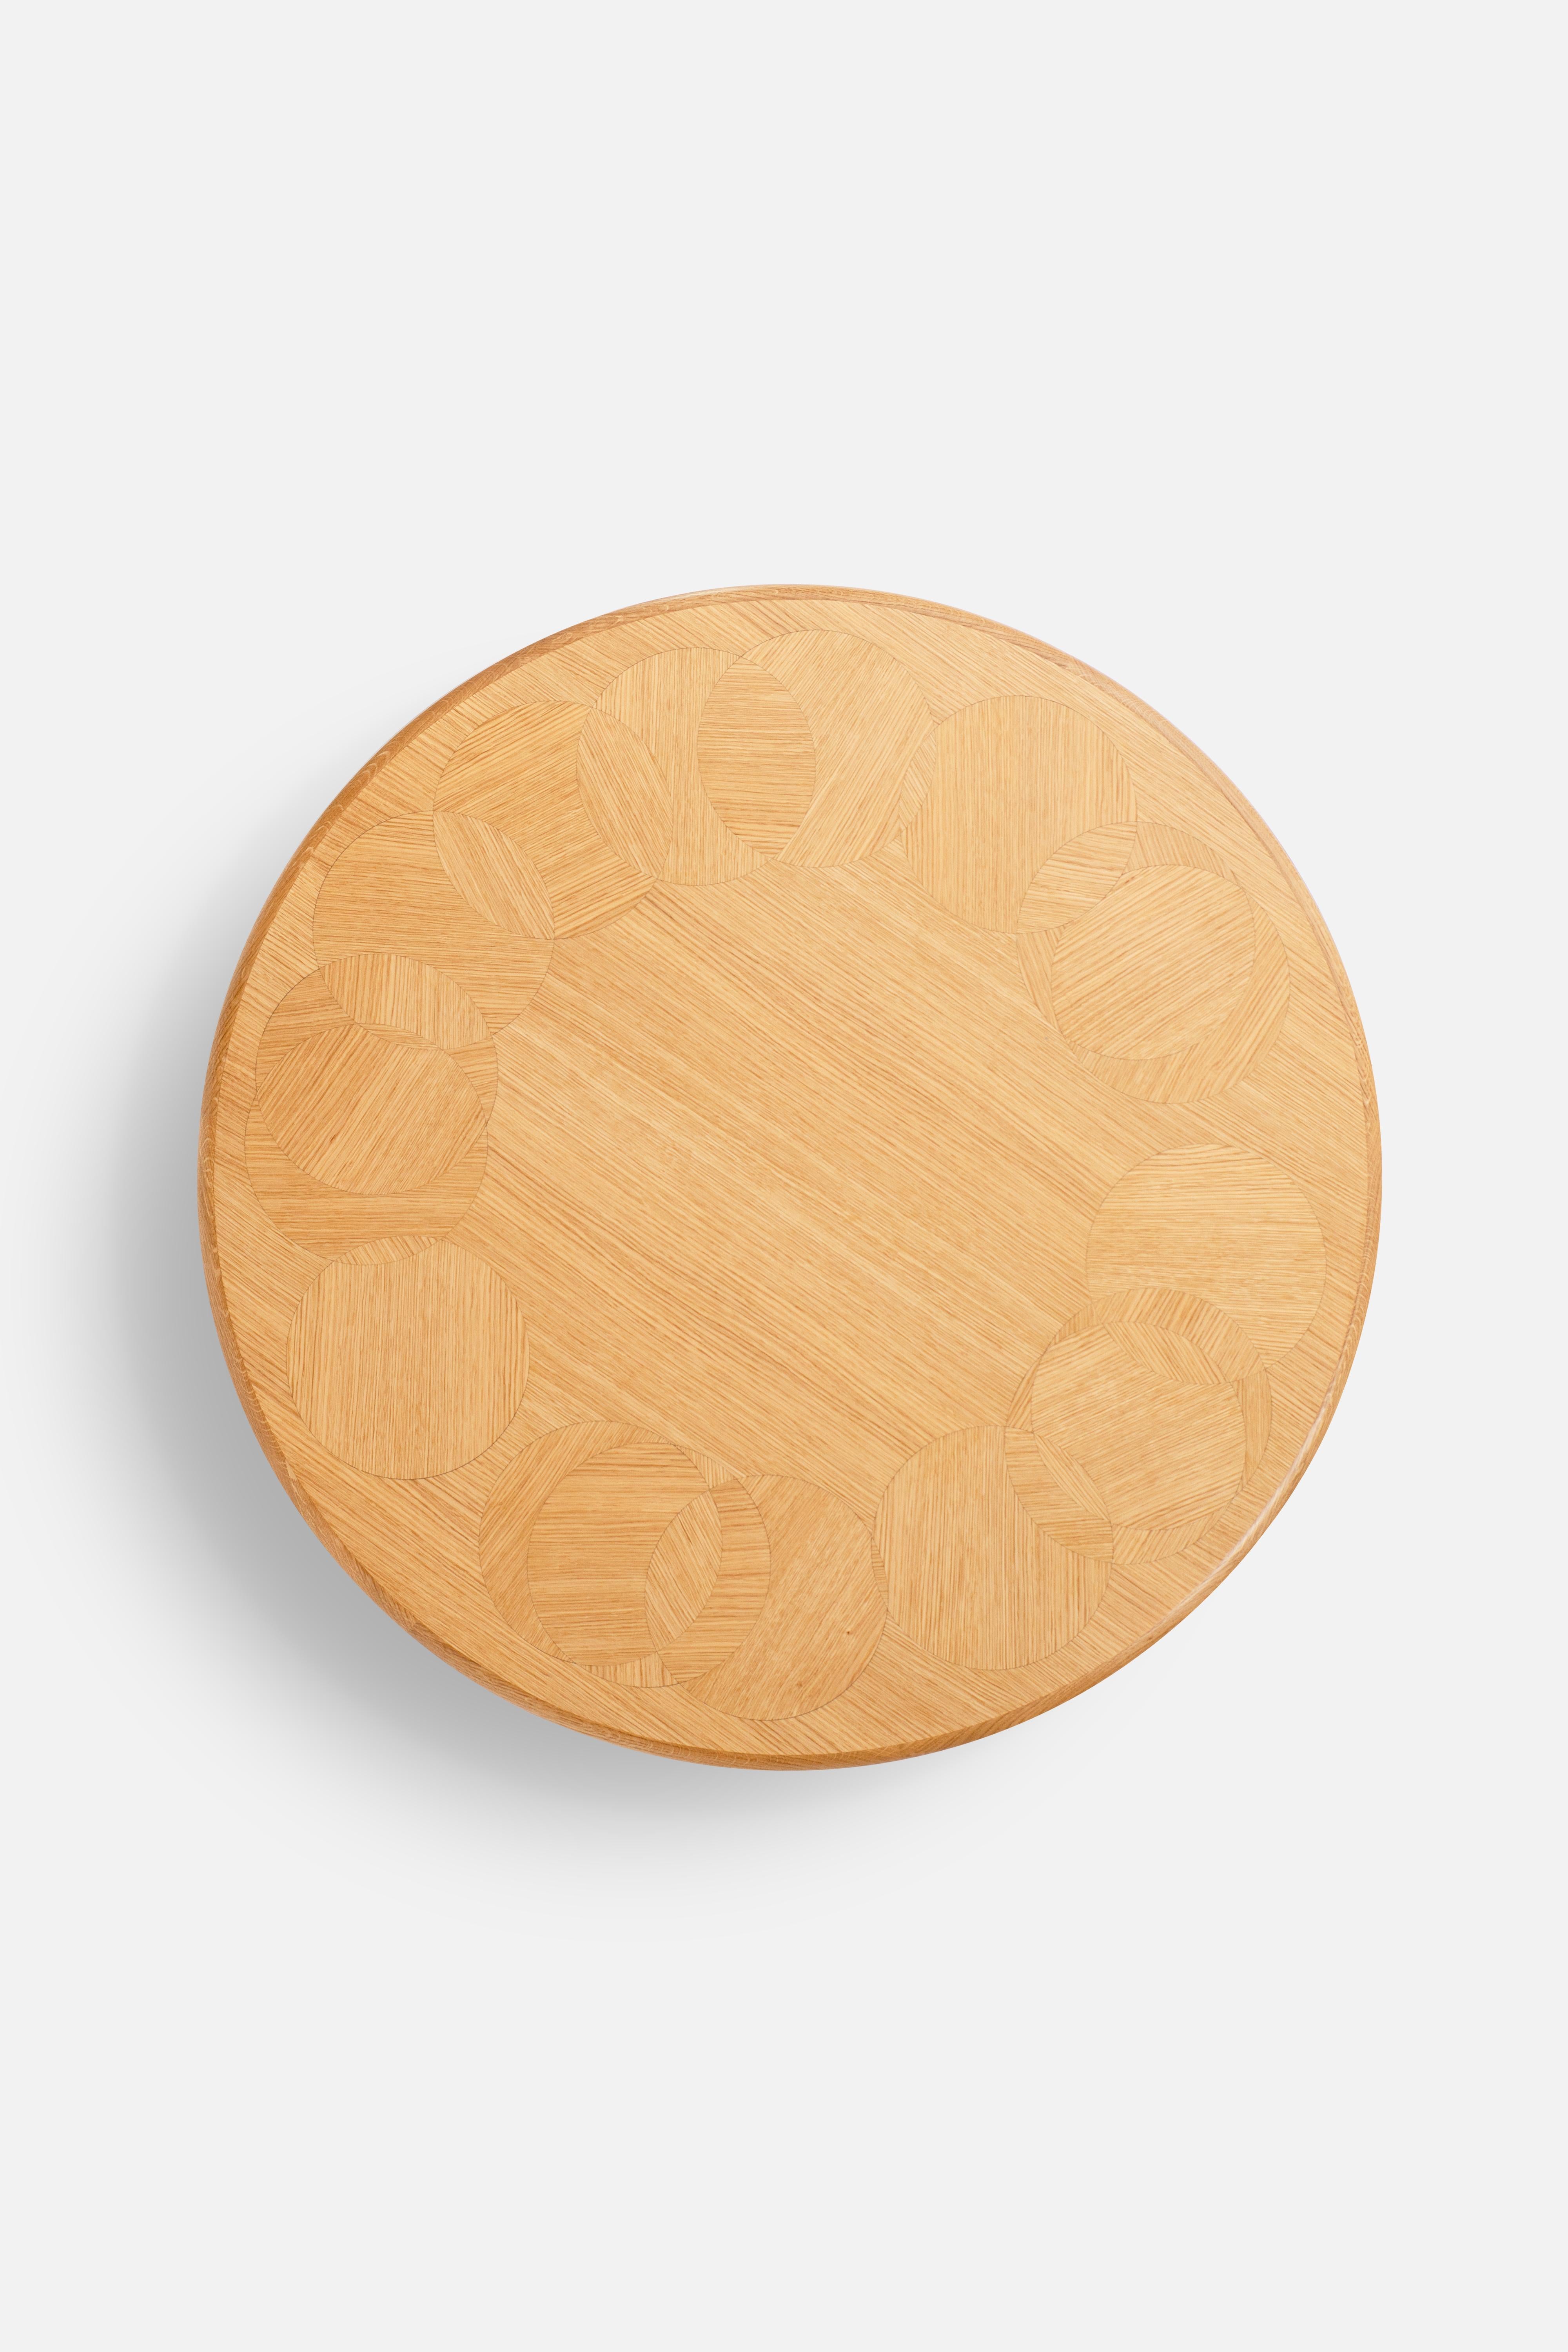 Italian Contemporary Dining, Living Room Table NaessiStudio for Medulum Oak Wood For Sale